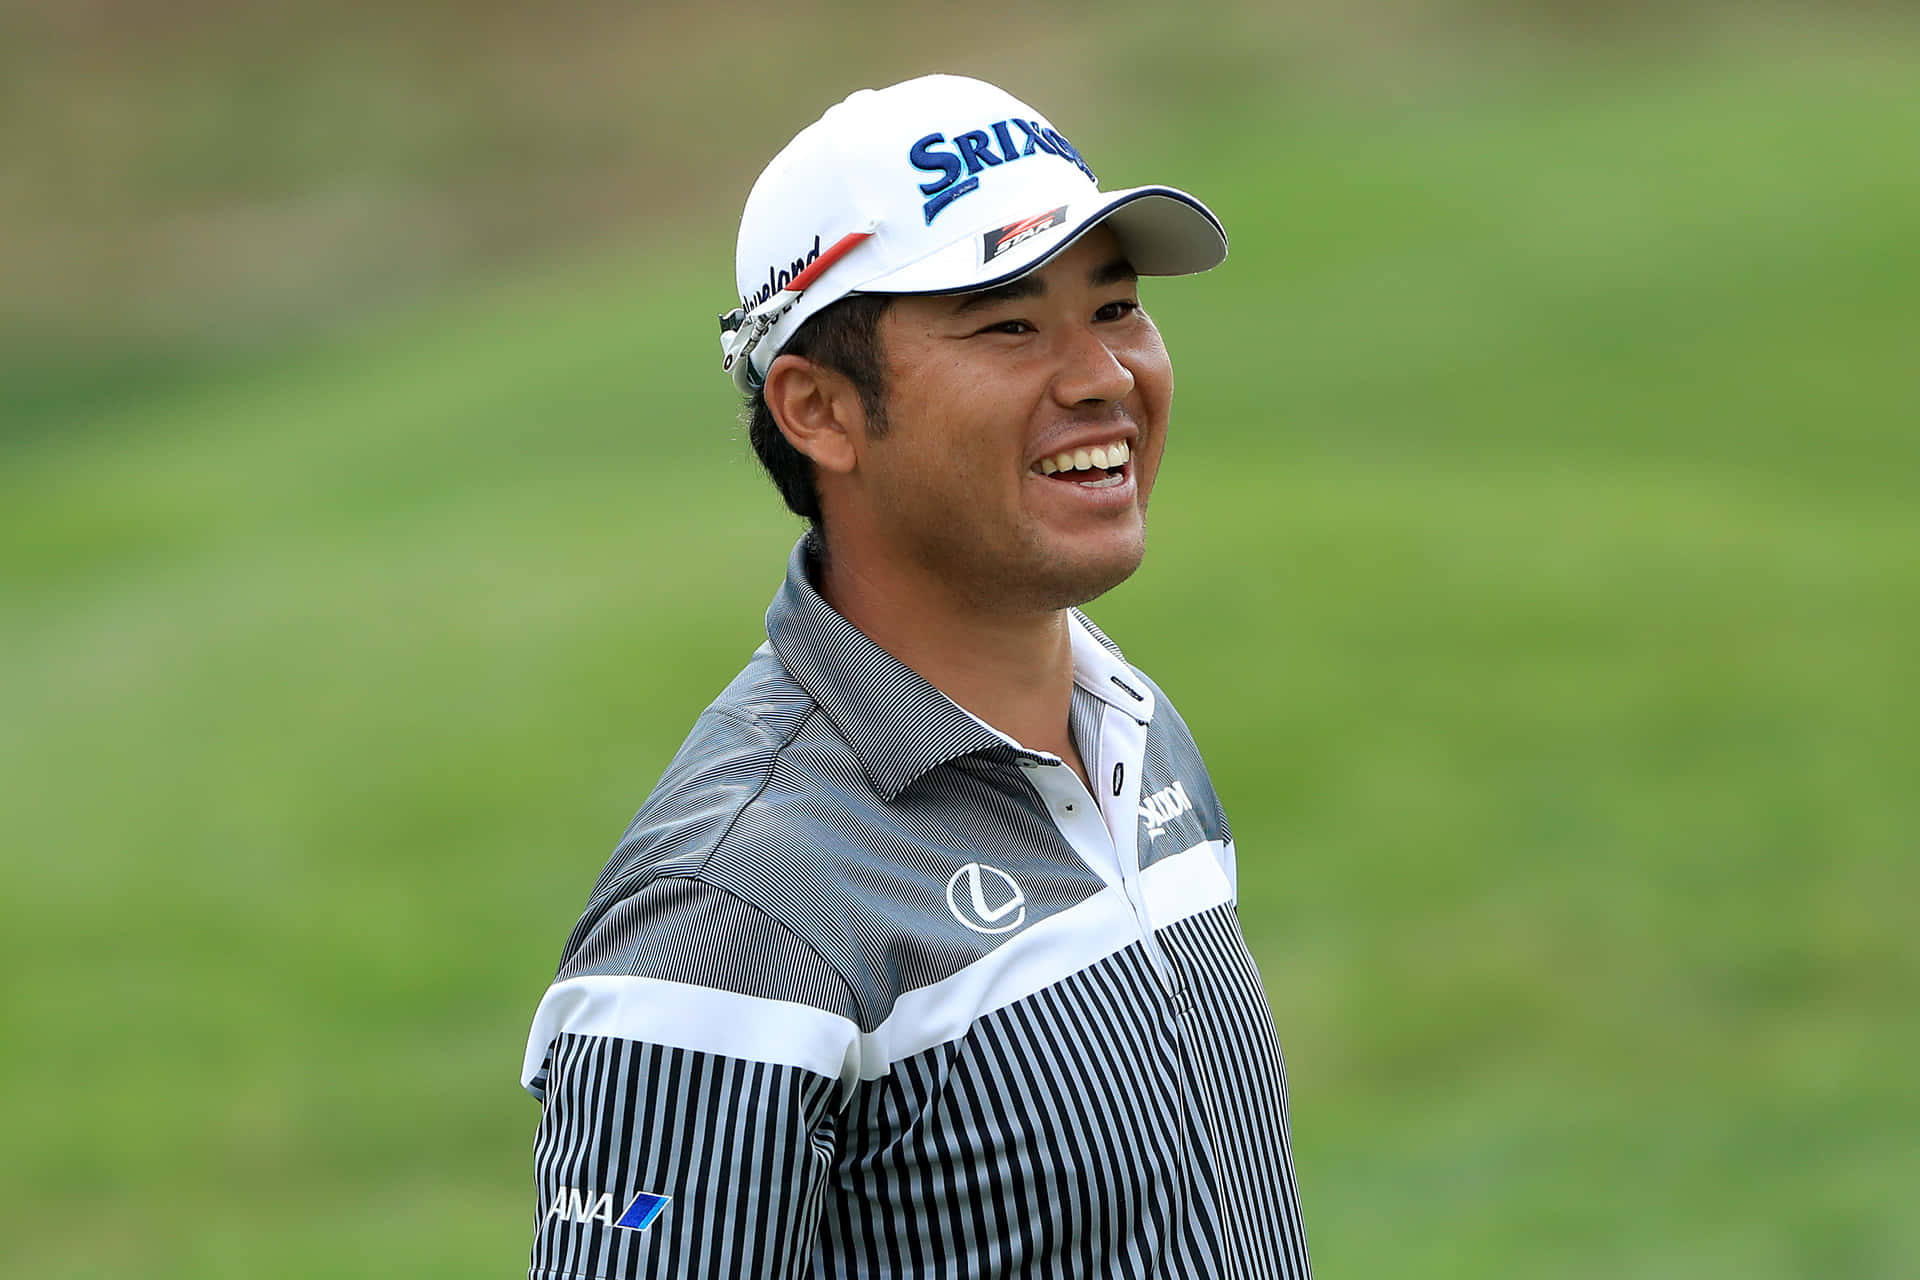 Shigeki Maruyama Smiling On Golf Course Wallpaper